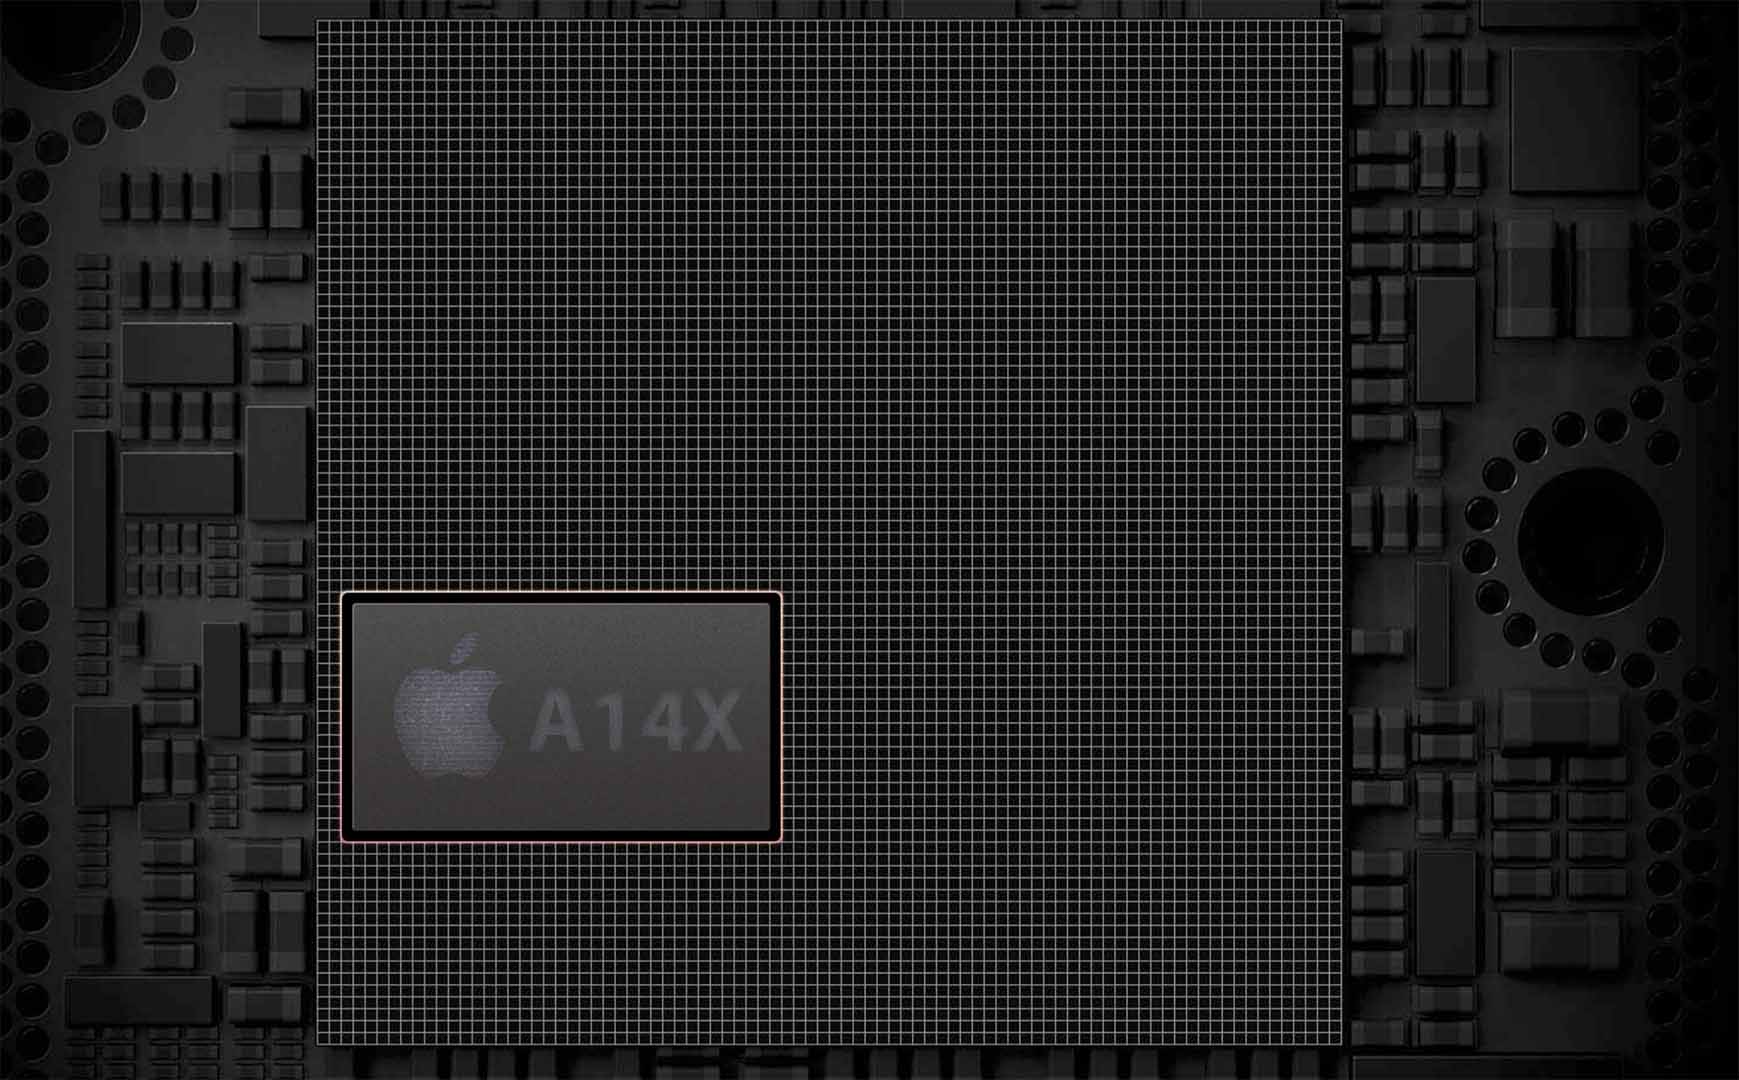 A14X-Bionic_large_chip